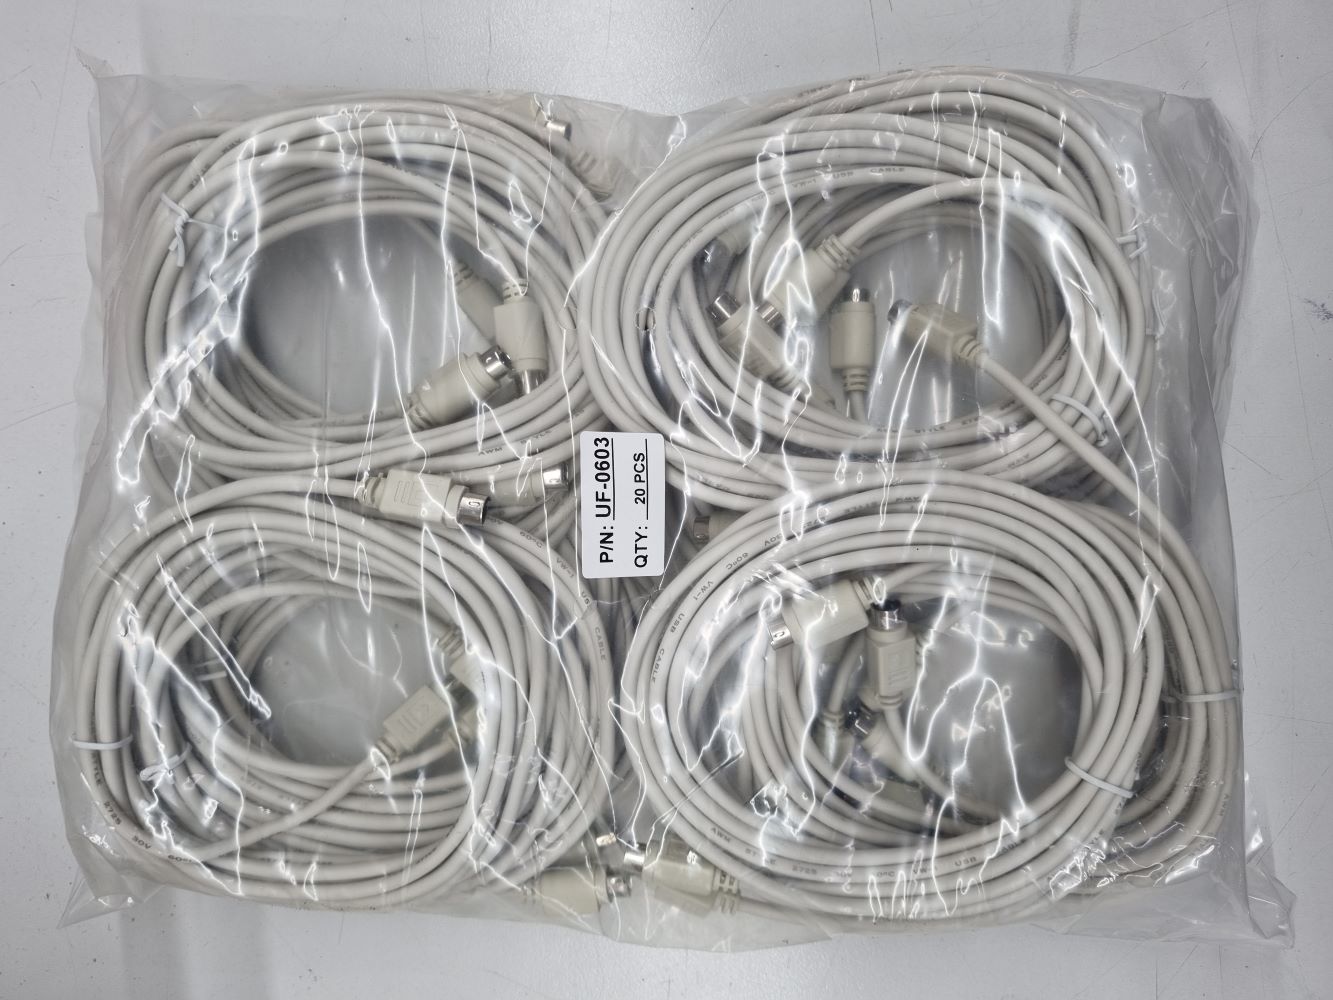 20 x Mini-DIN 6-pol Kabel